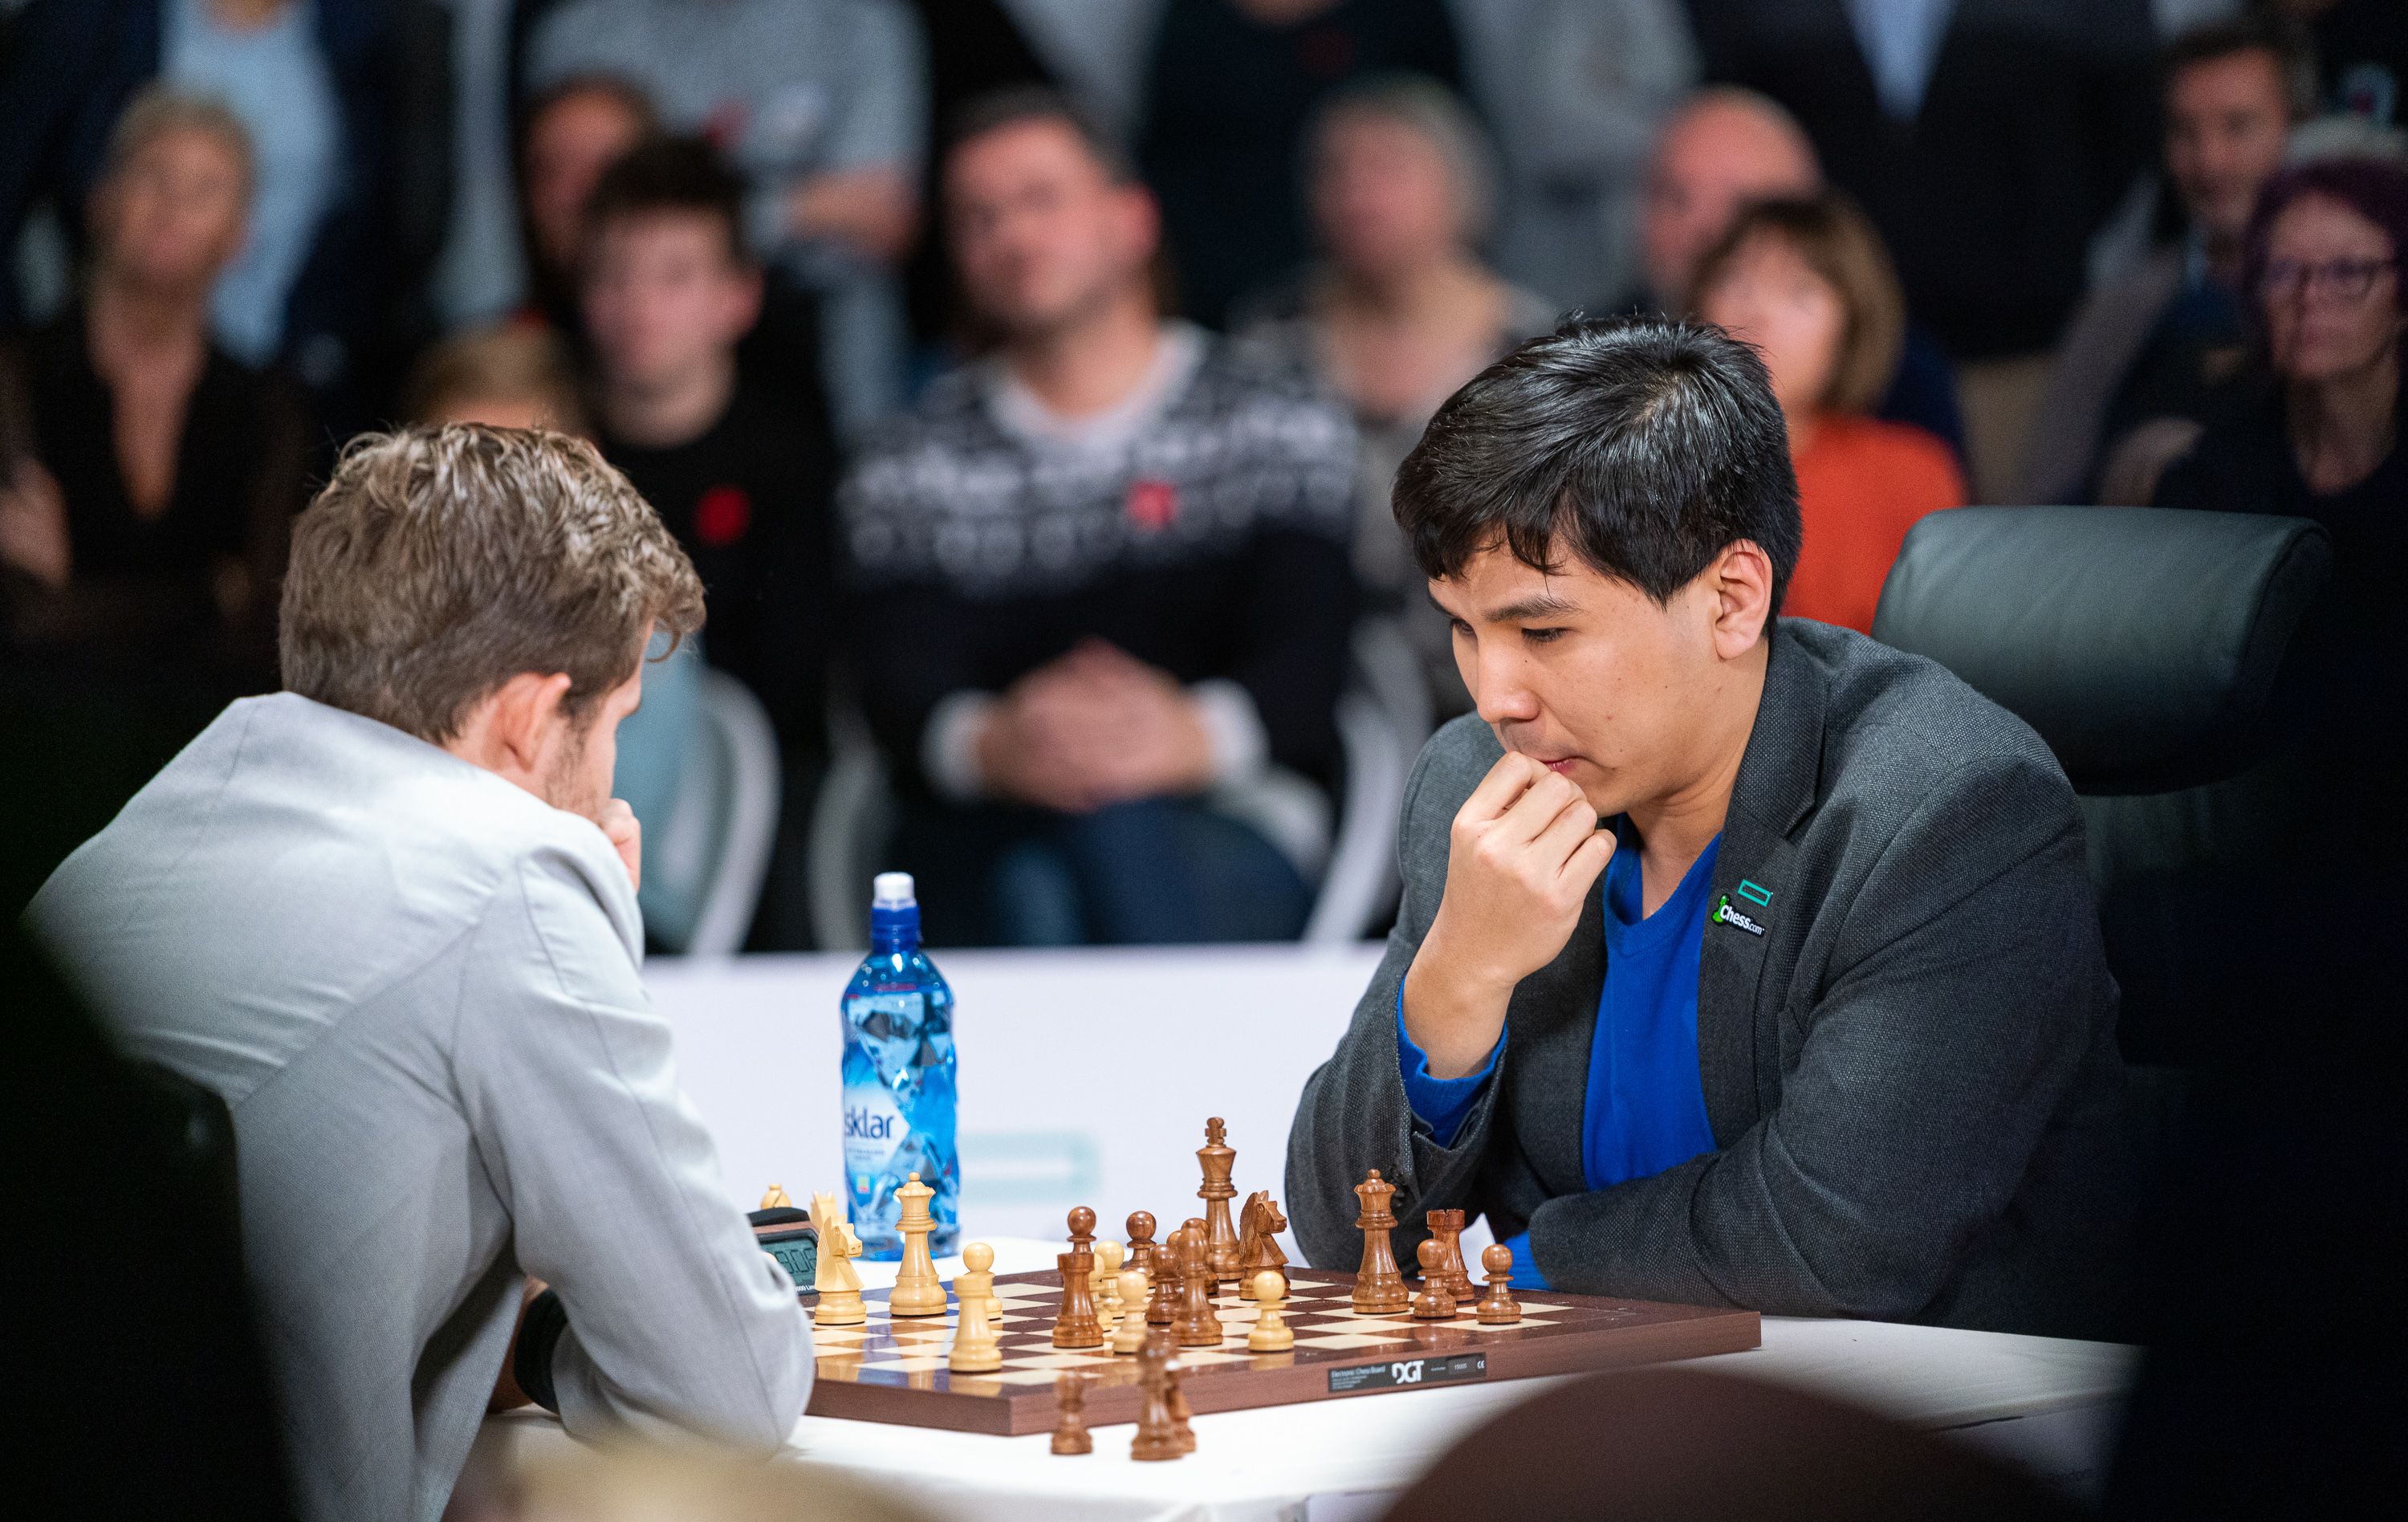 Chess.com Português on X: Campeonato Mundial de Xadrez Fischer Random 2022  🏆 📸 Maria Emelianova /   /  X